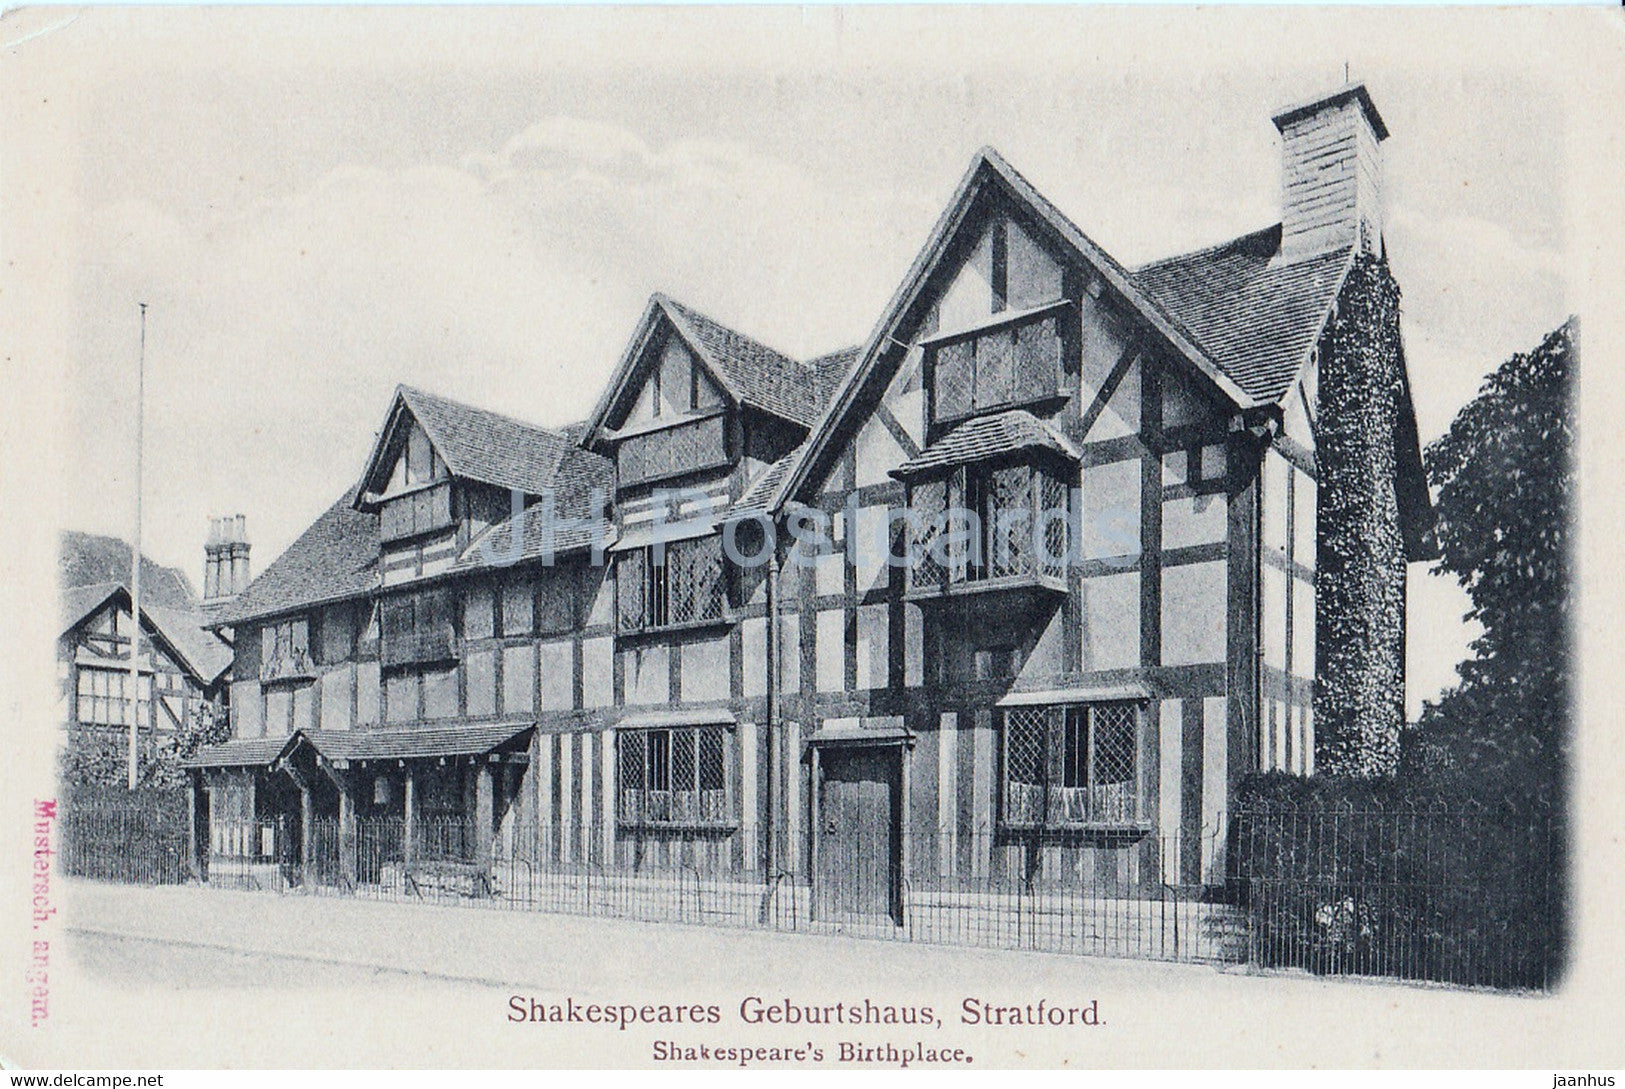 Stratford on Avon - Shakespeares Geburtshaus - Birthplace - old postcard - England - United Kingdom - unused - JH Postcards